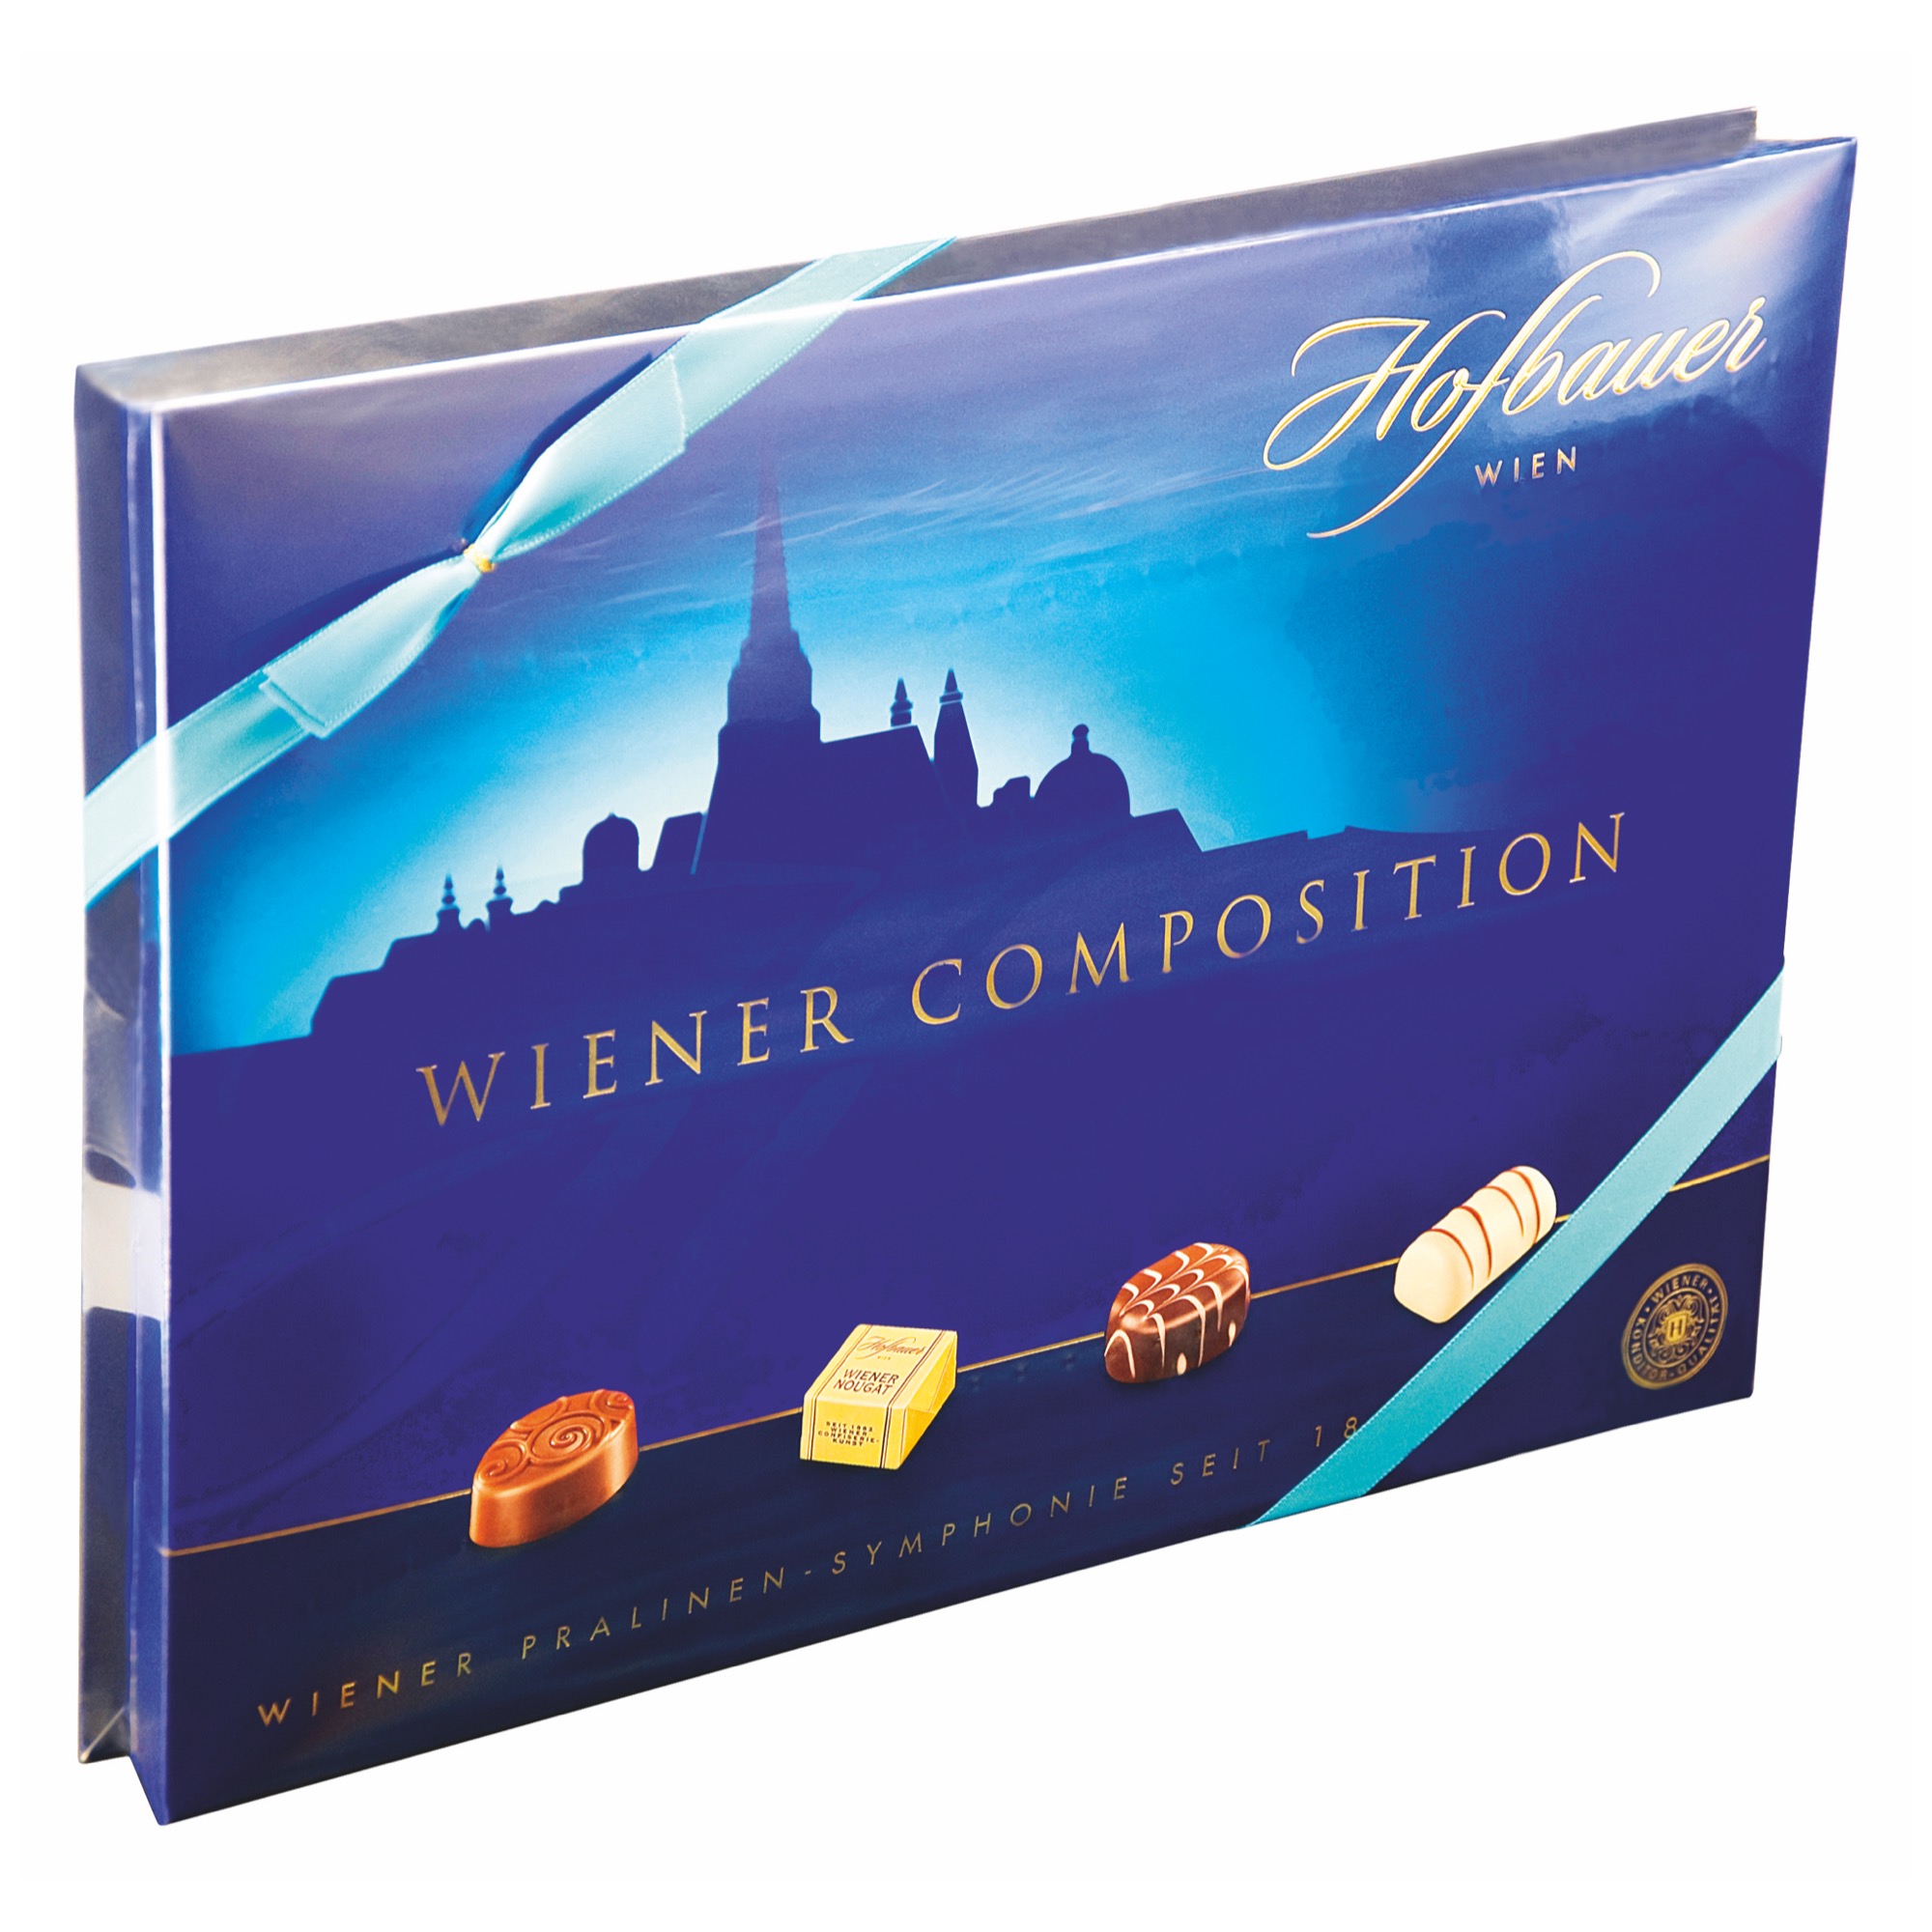 Hofbauer Wiener Composition 450g